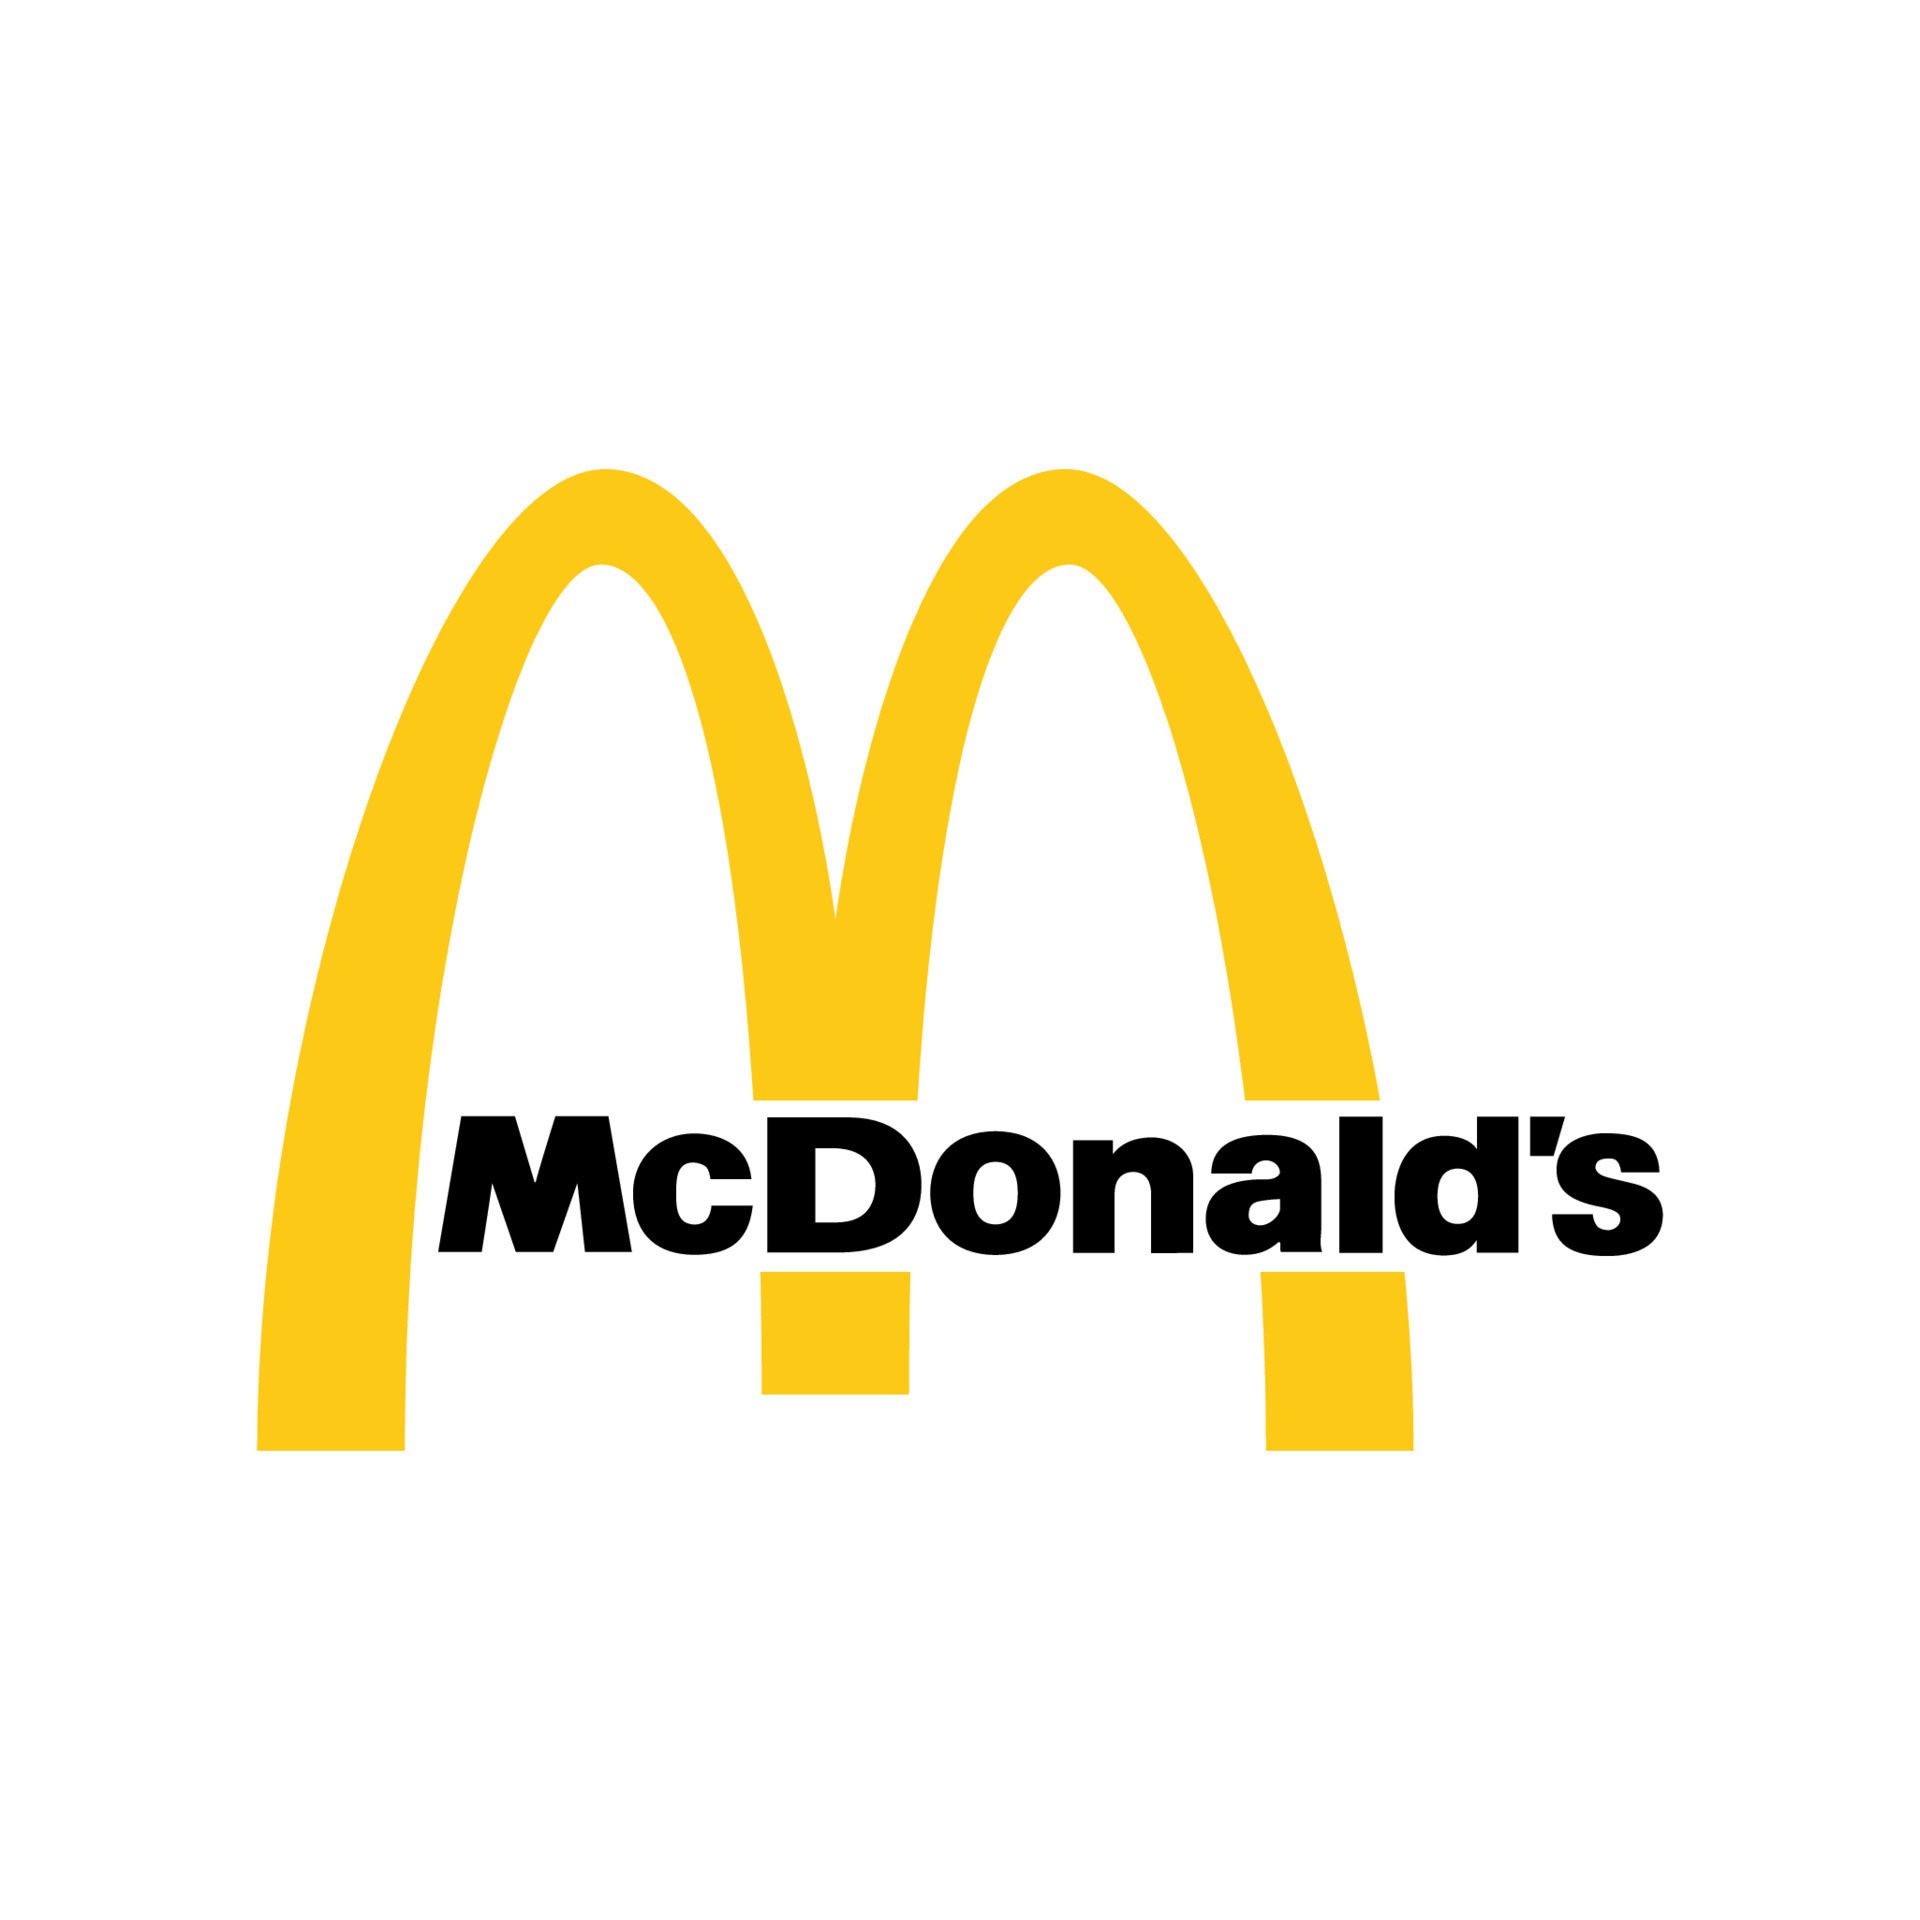 mcdonalds-logo-mcdonald-icon-free-free-vector - copia